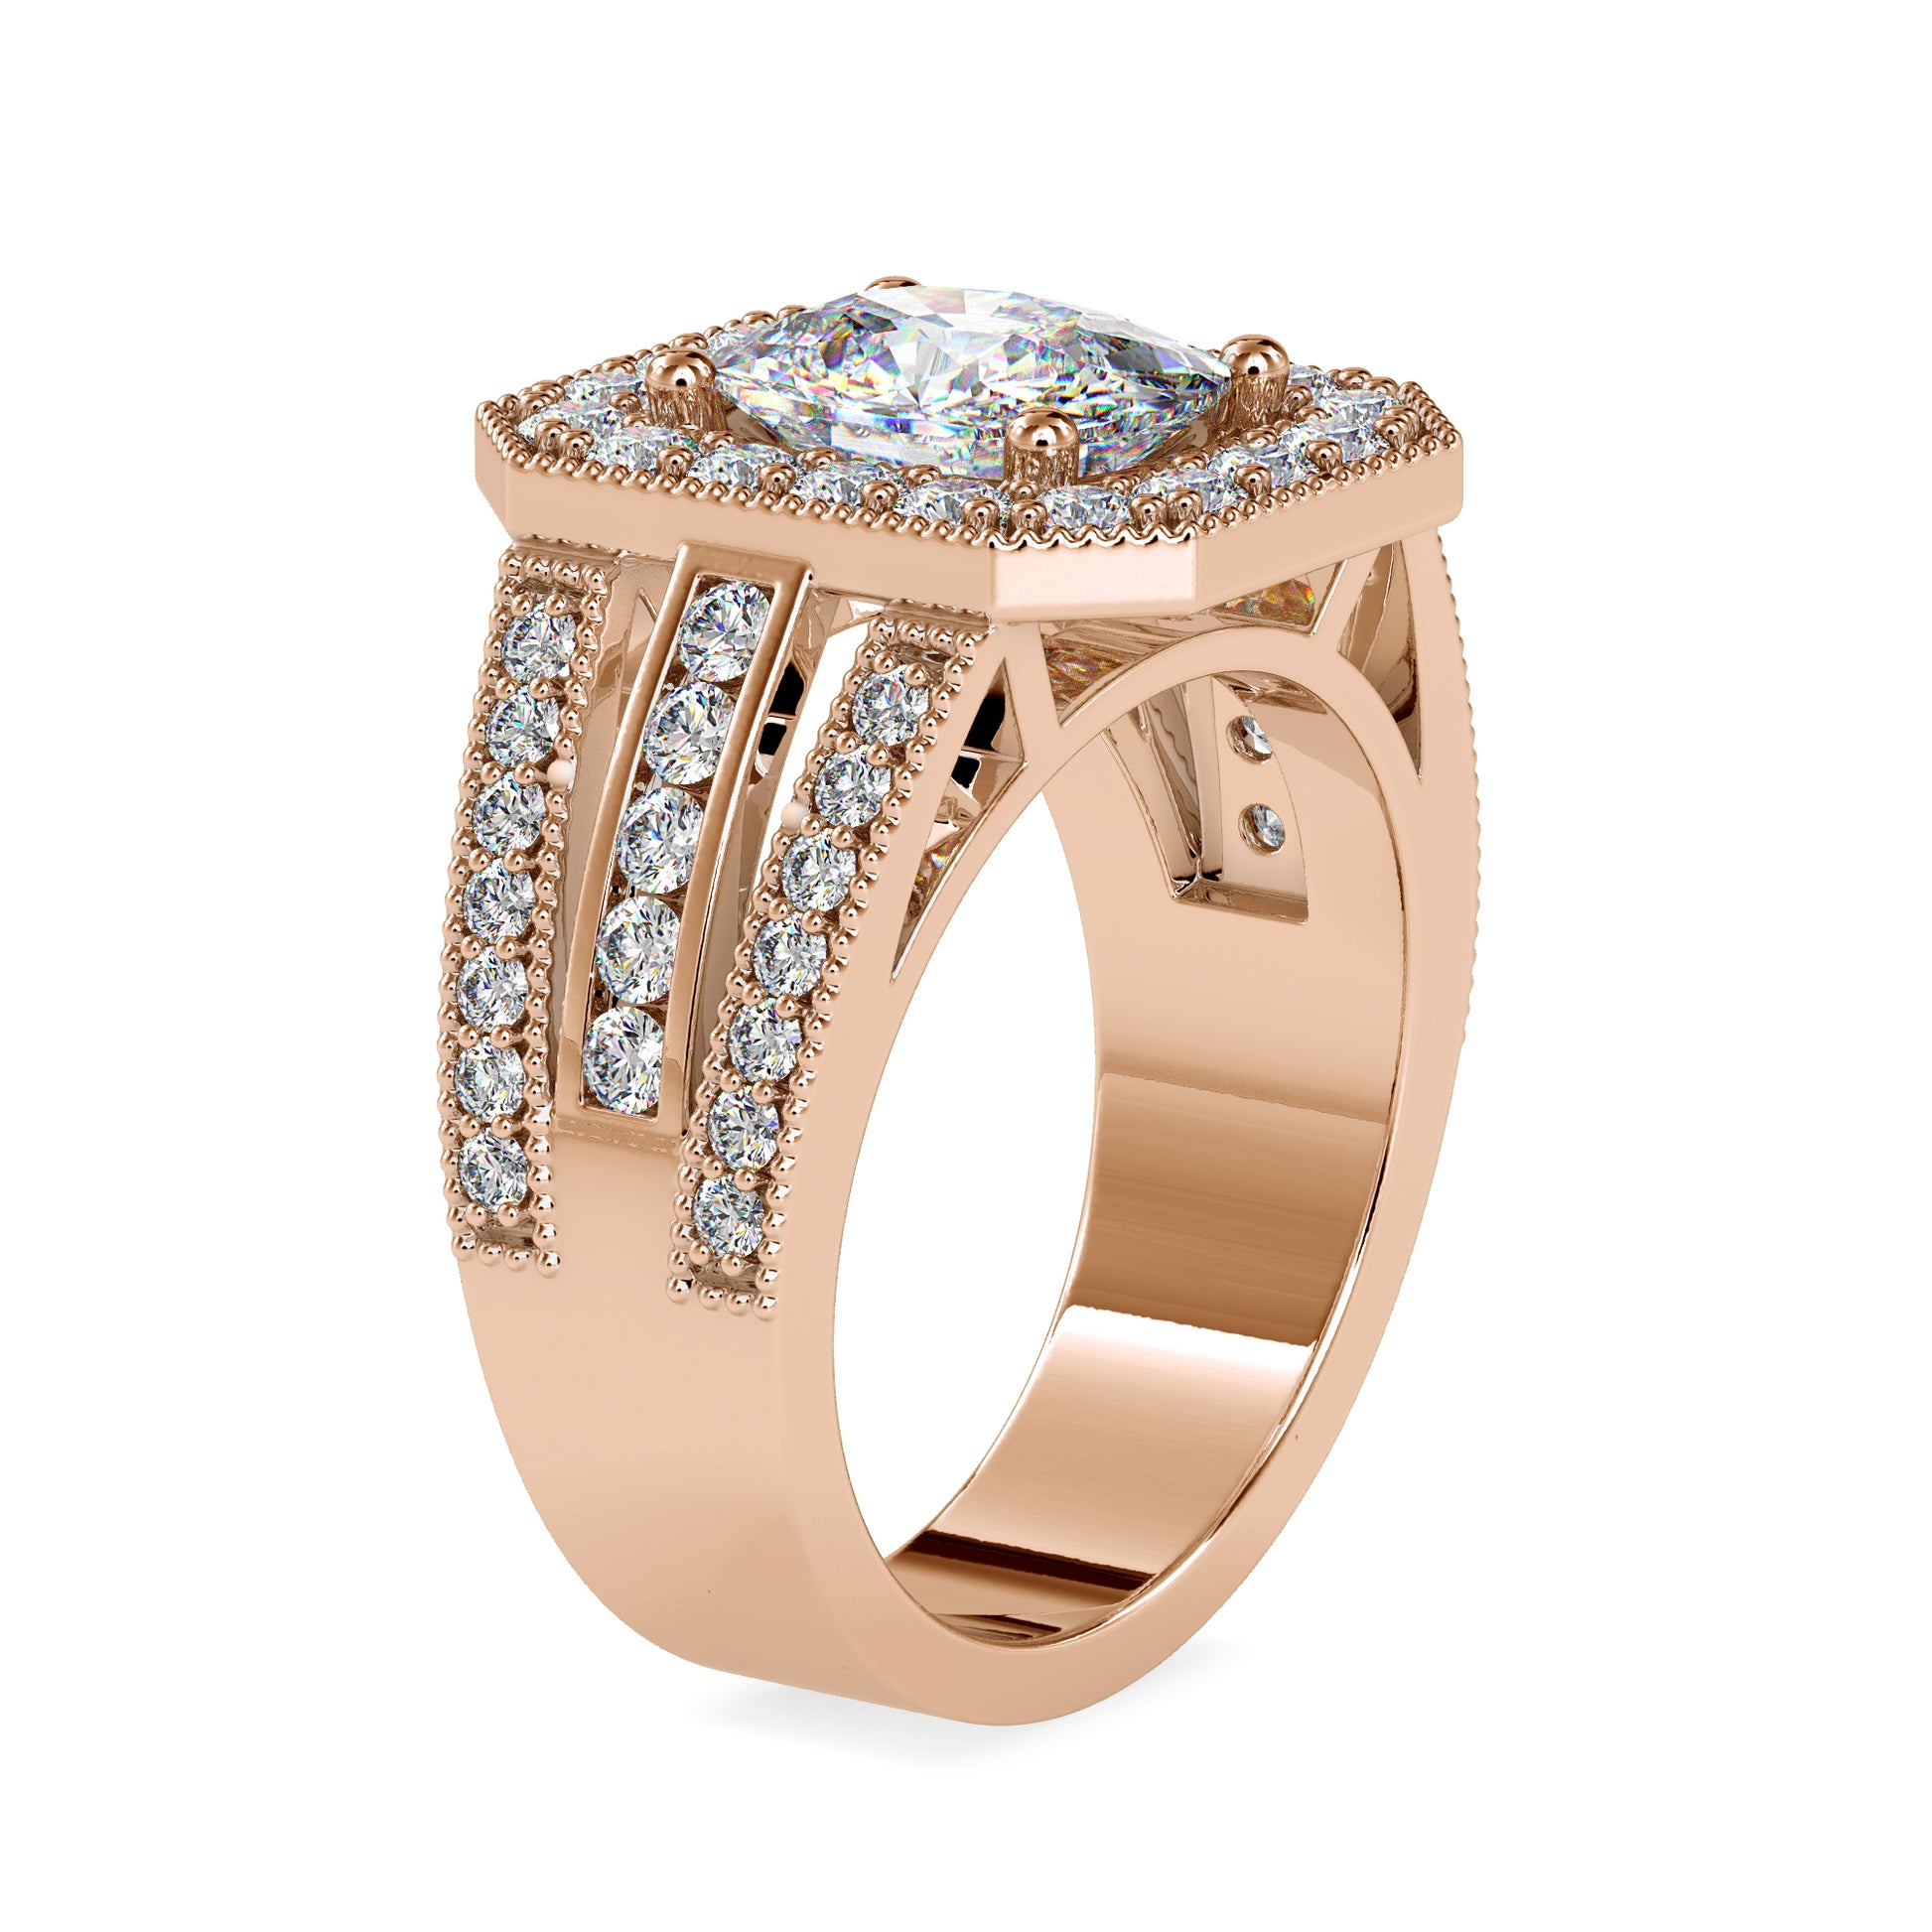 The Winston Ring Moissanite diamond